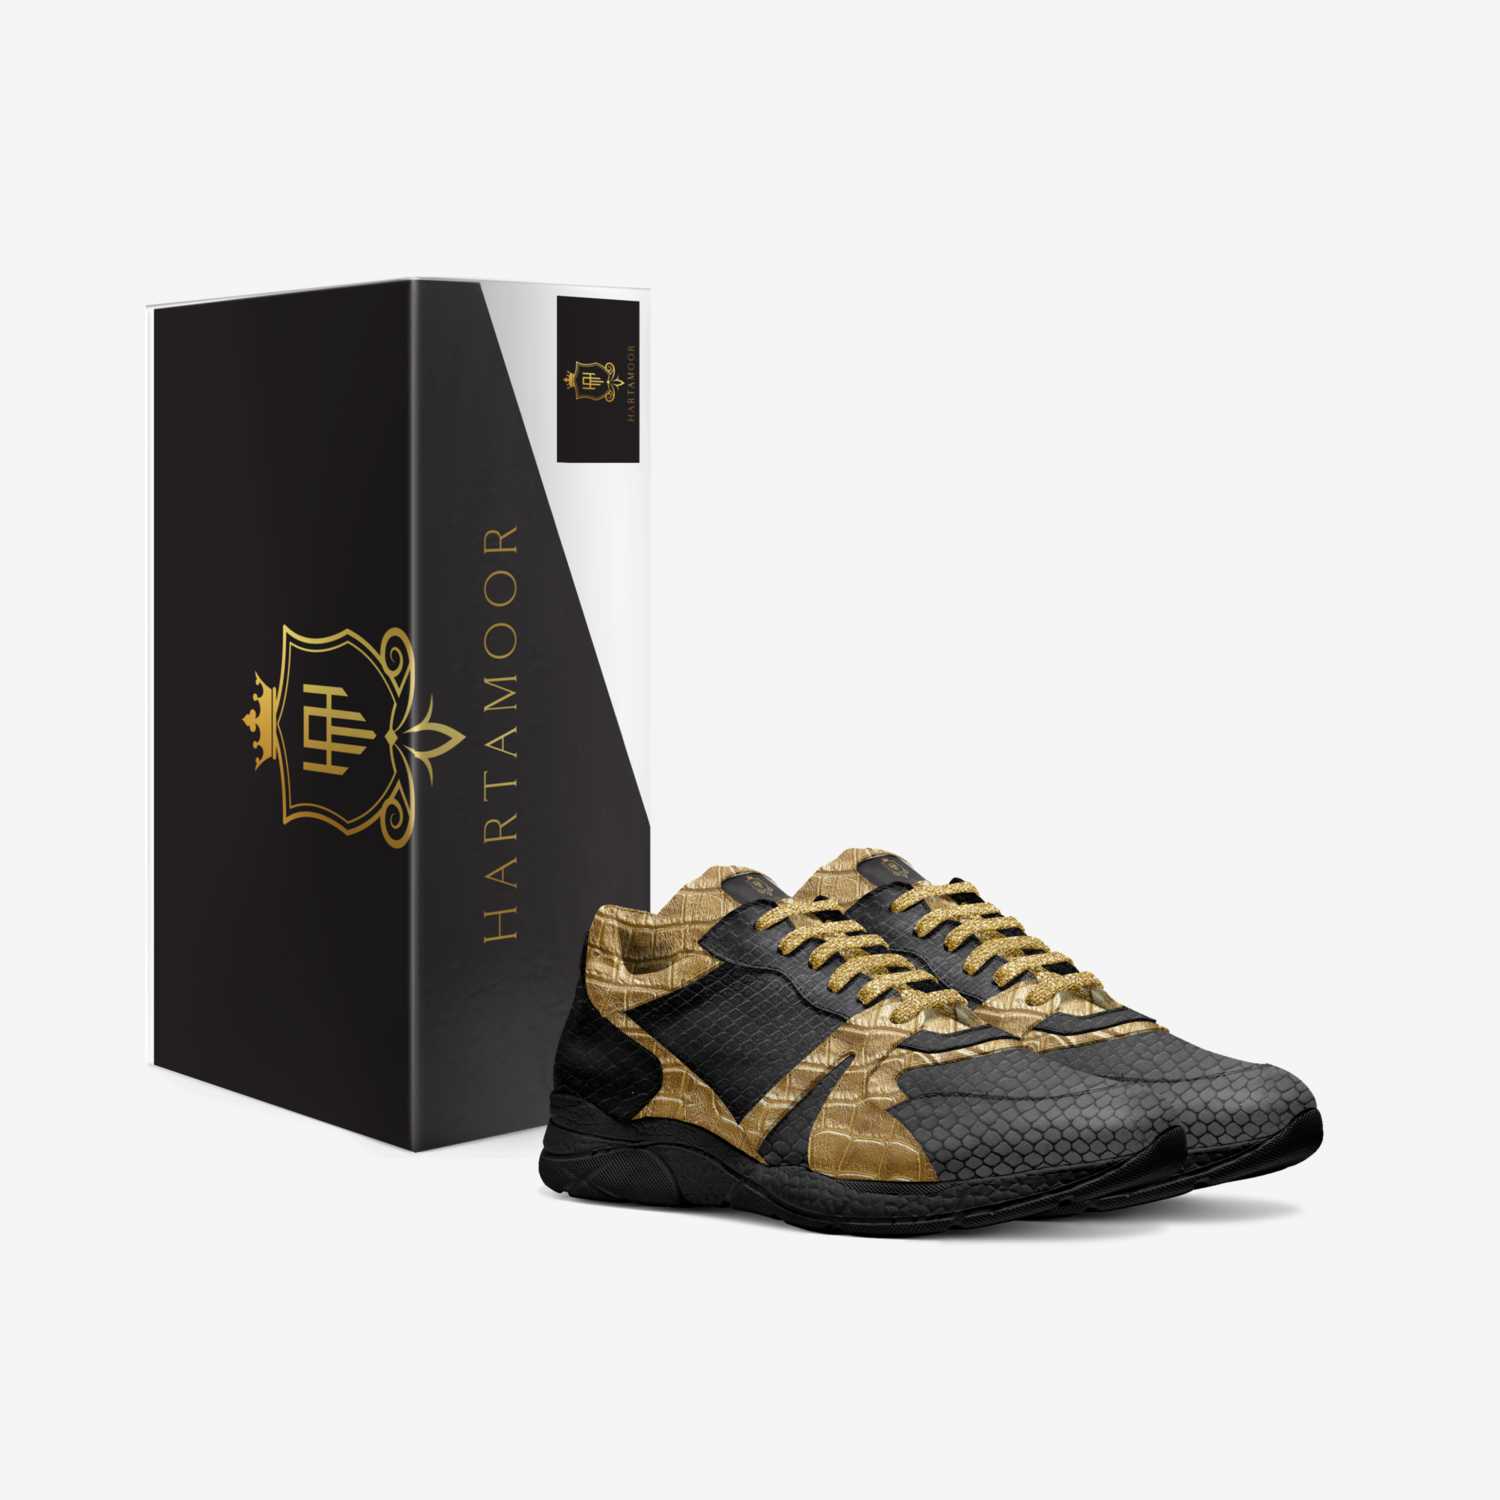 HArtaMoorNFT custom made in Italy shoes by Jean Felisor Bey | Box view